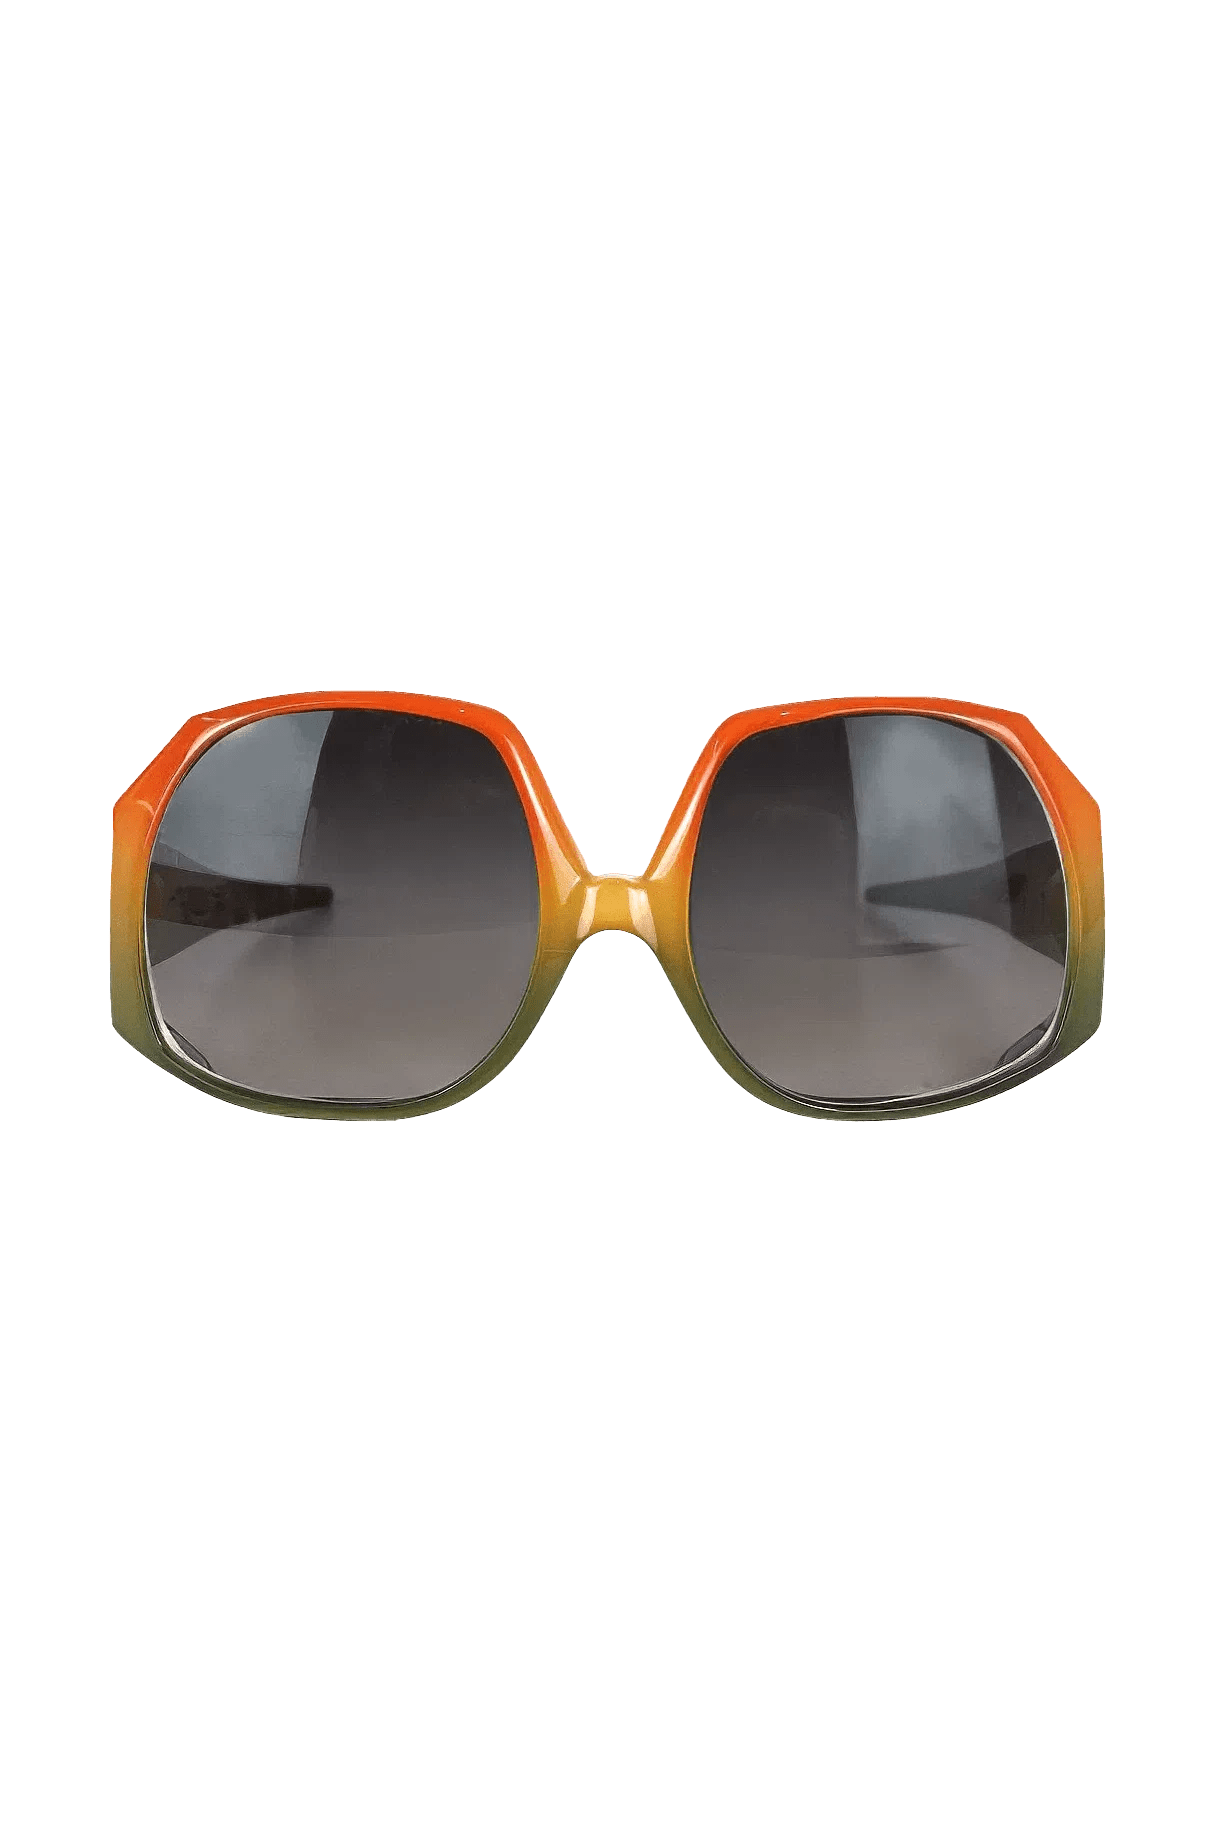 Dior Vintage Mango XL Sunglasses